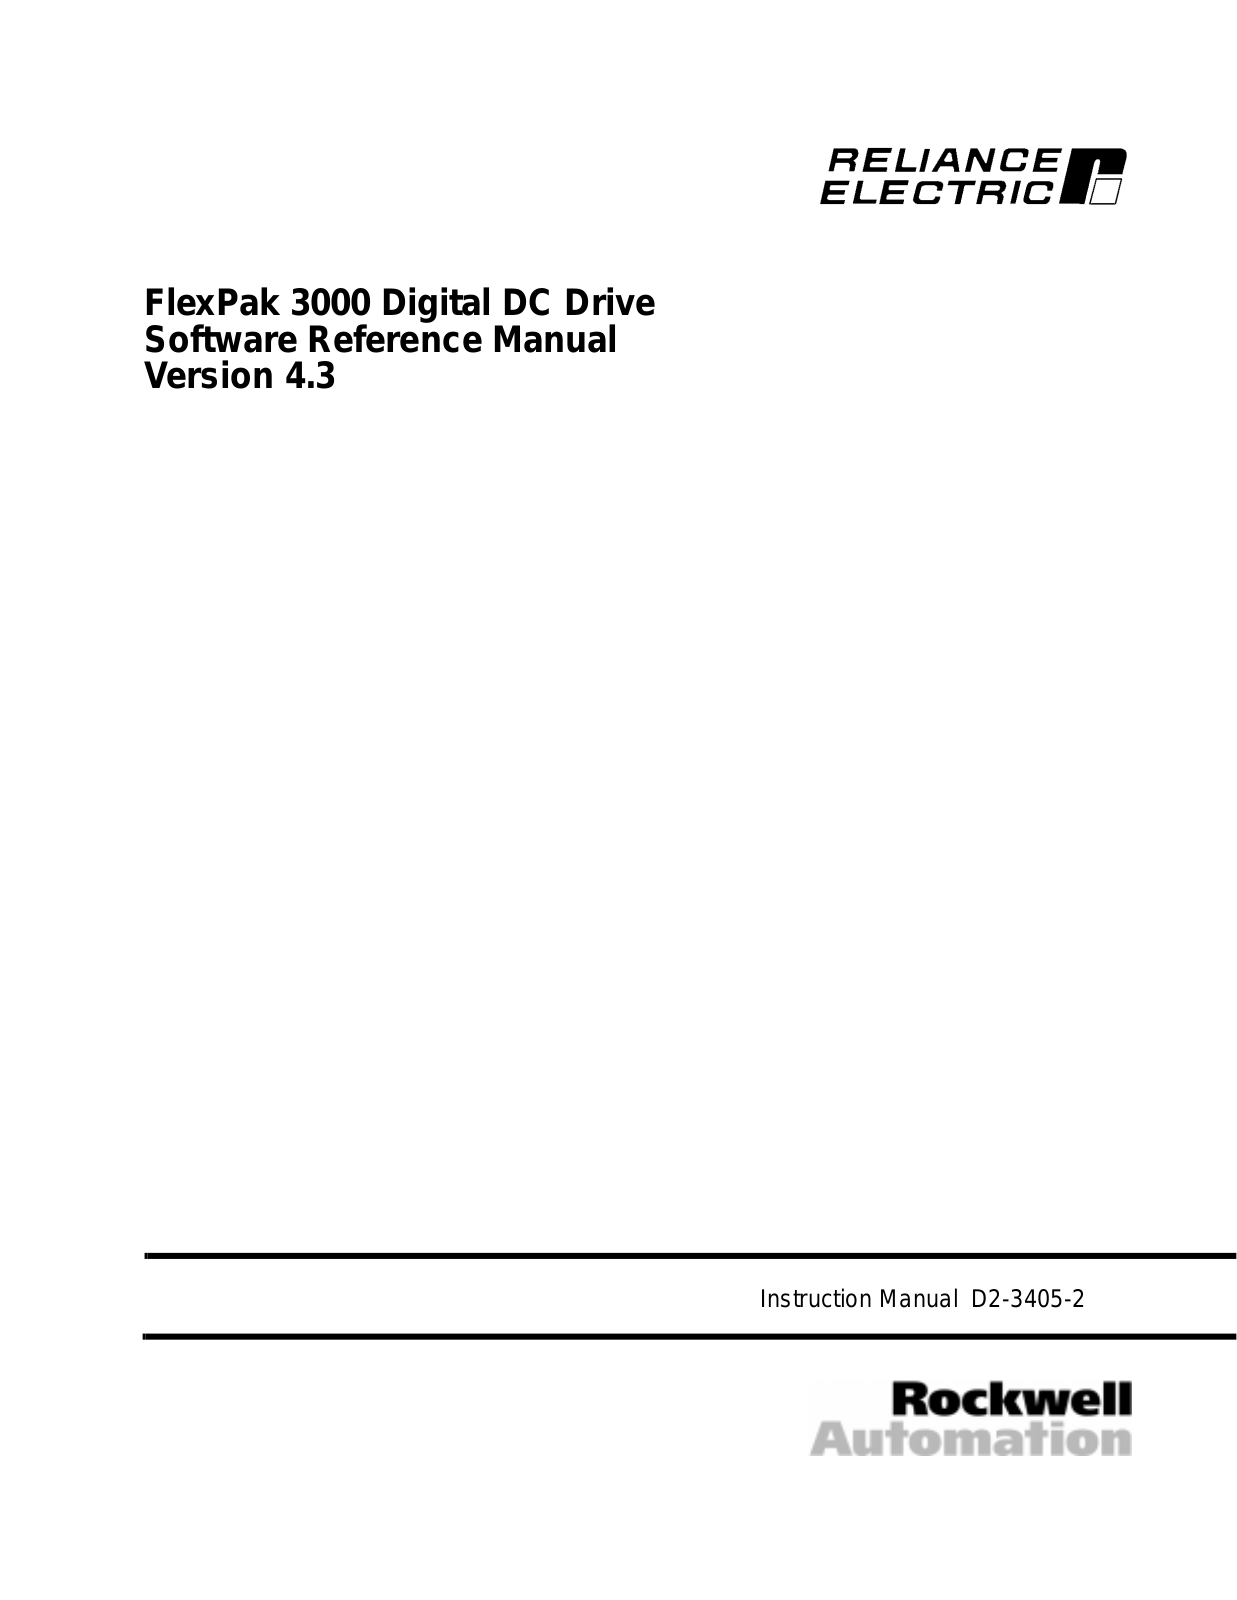 Rockwell Automation FlexPak 3000 Digital DC Drive User Manual